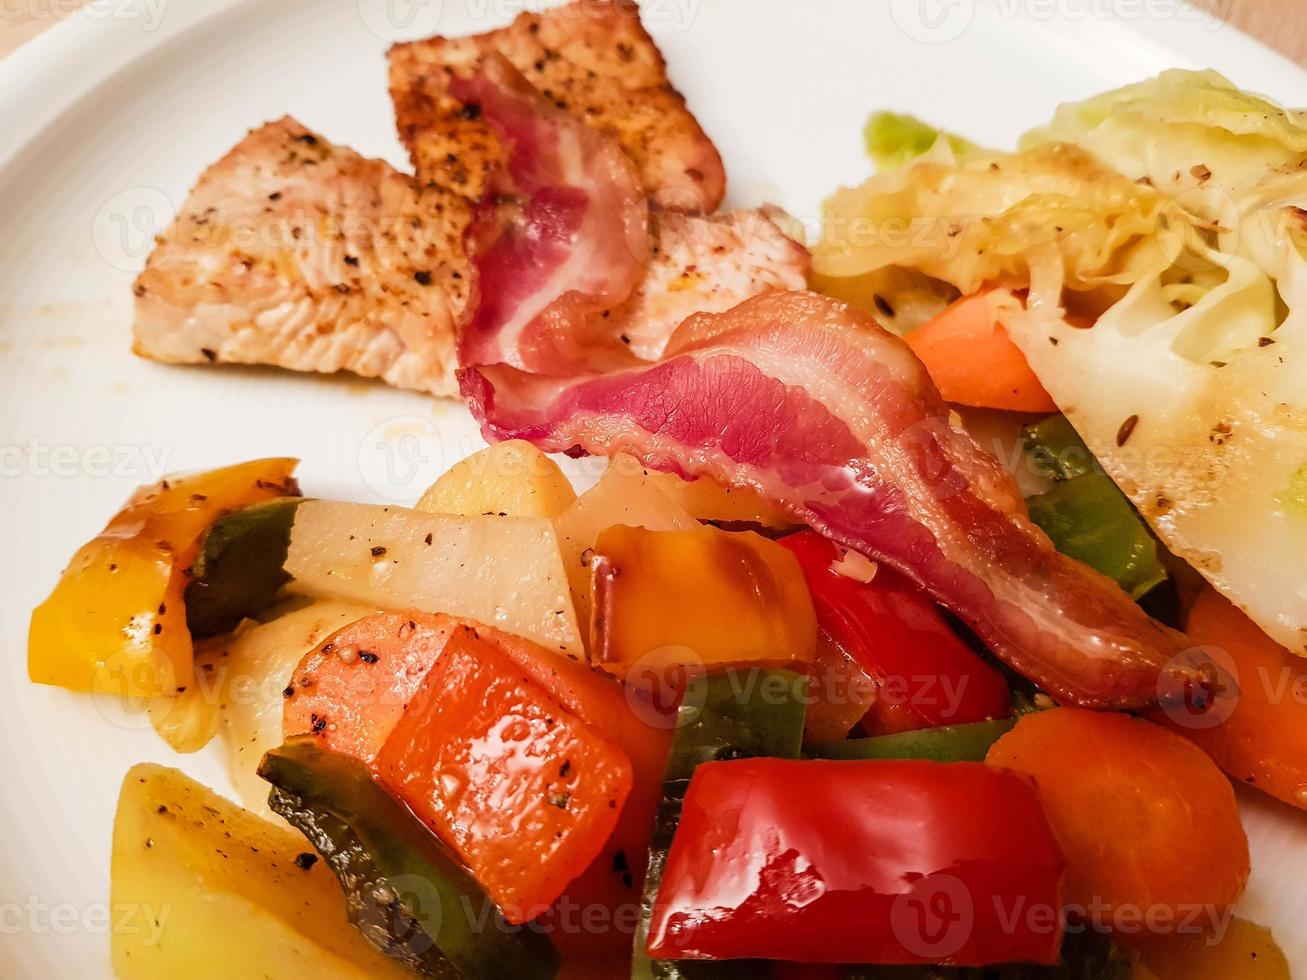 Vegetable and pork tenderloin casserole photo